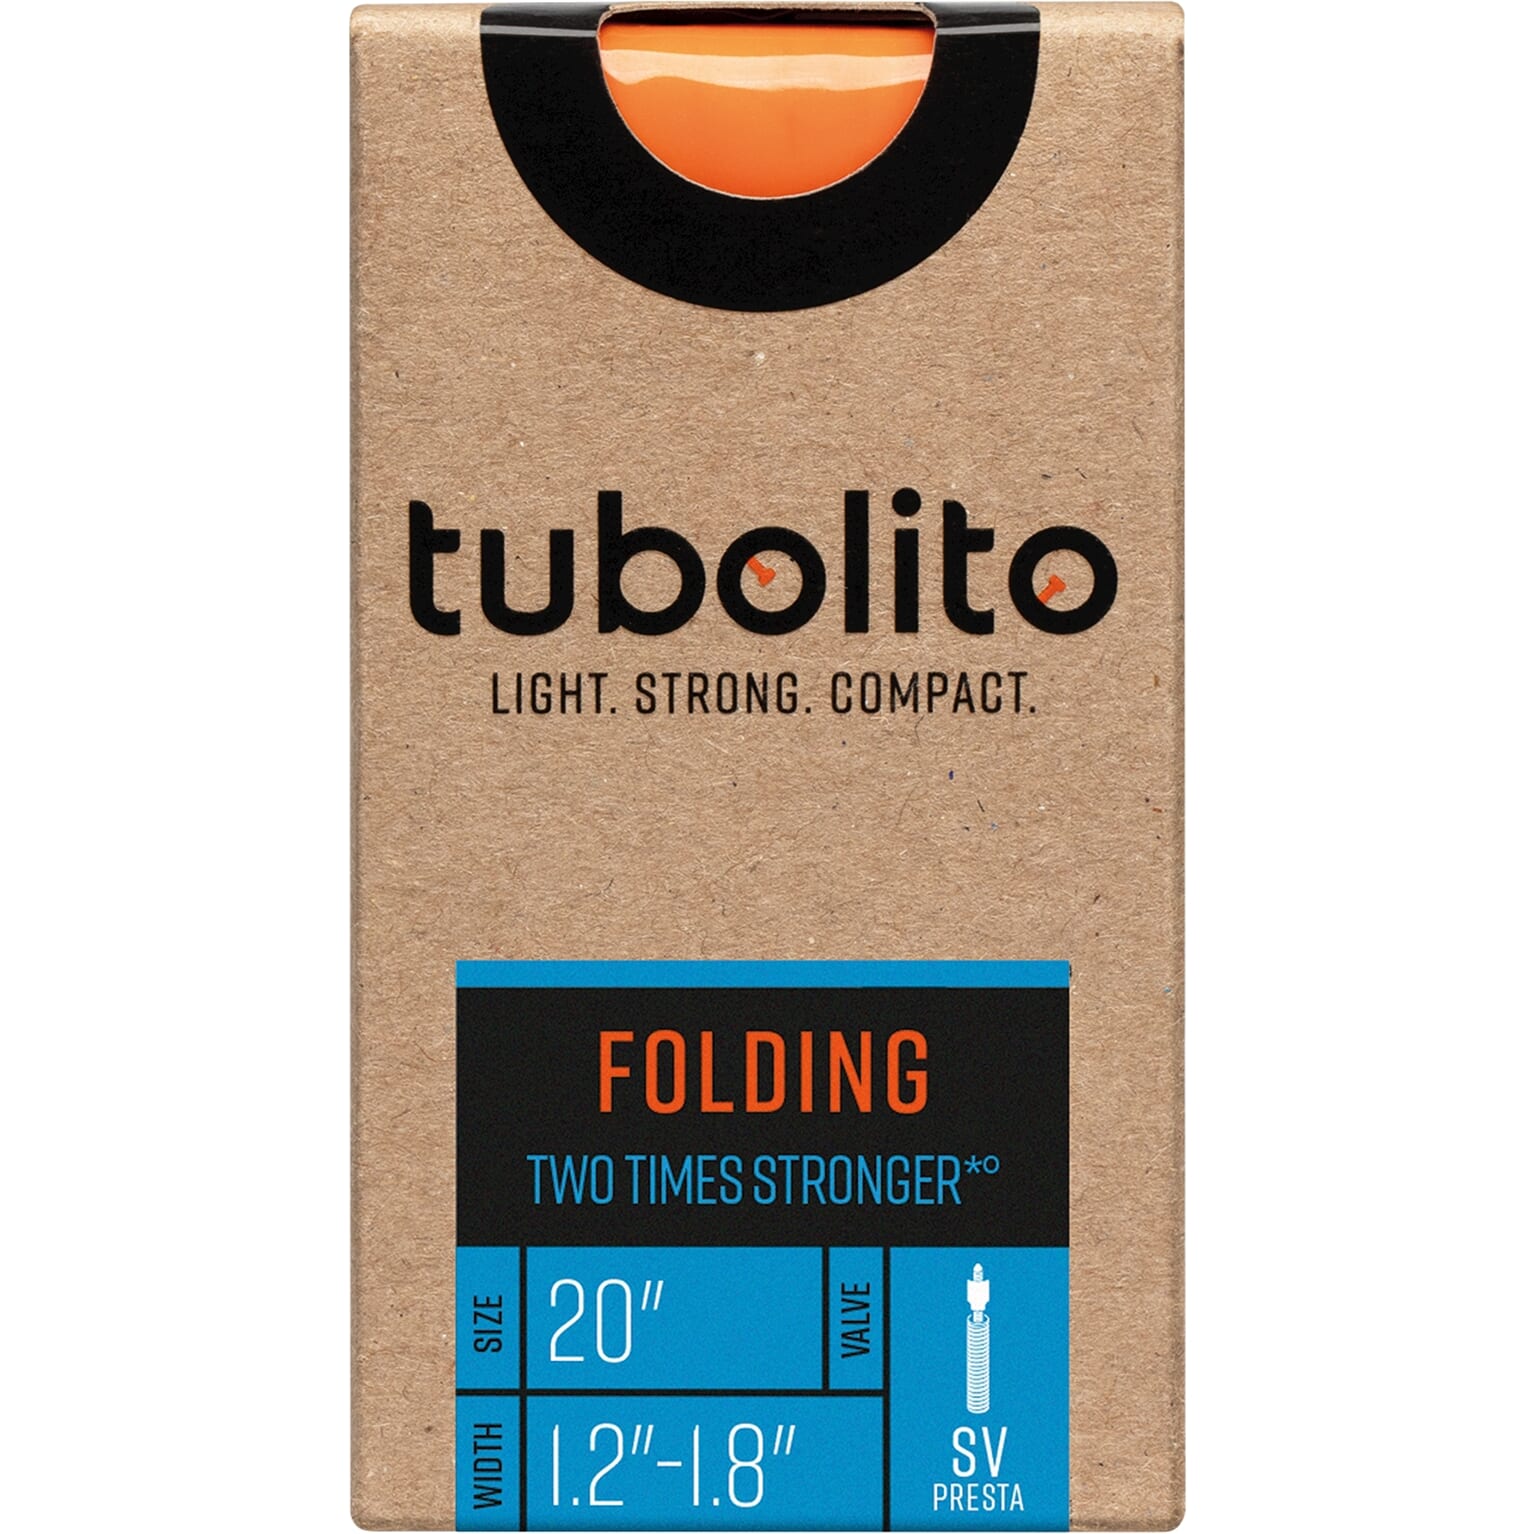 Tubolito Bnb Folding 20 x 1.2 -1.8 fv 42mm